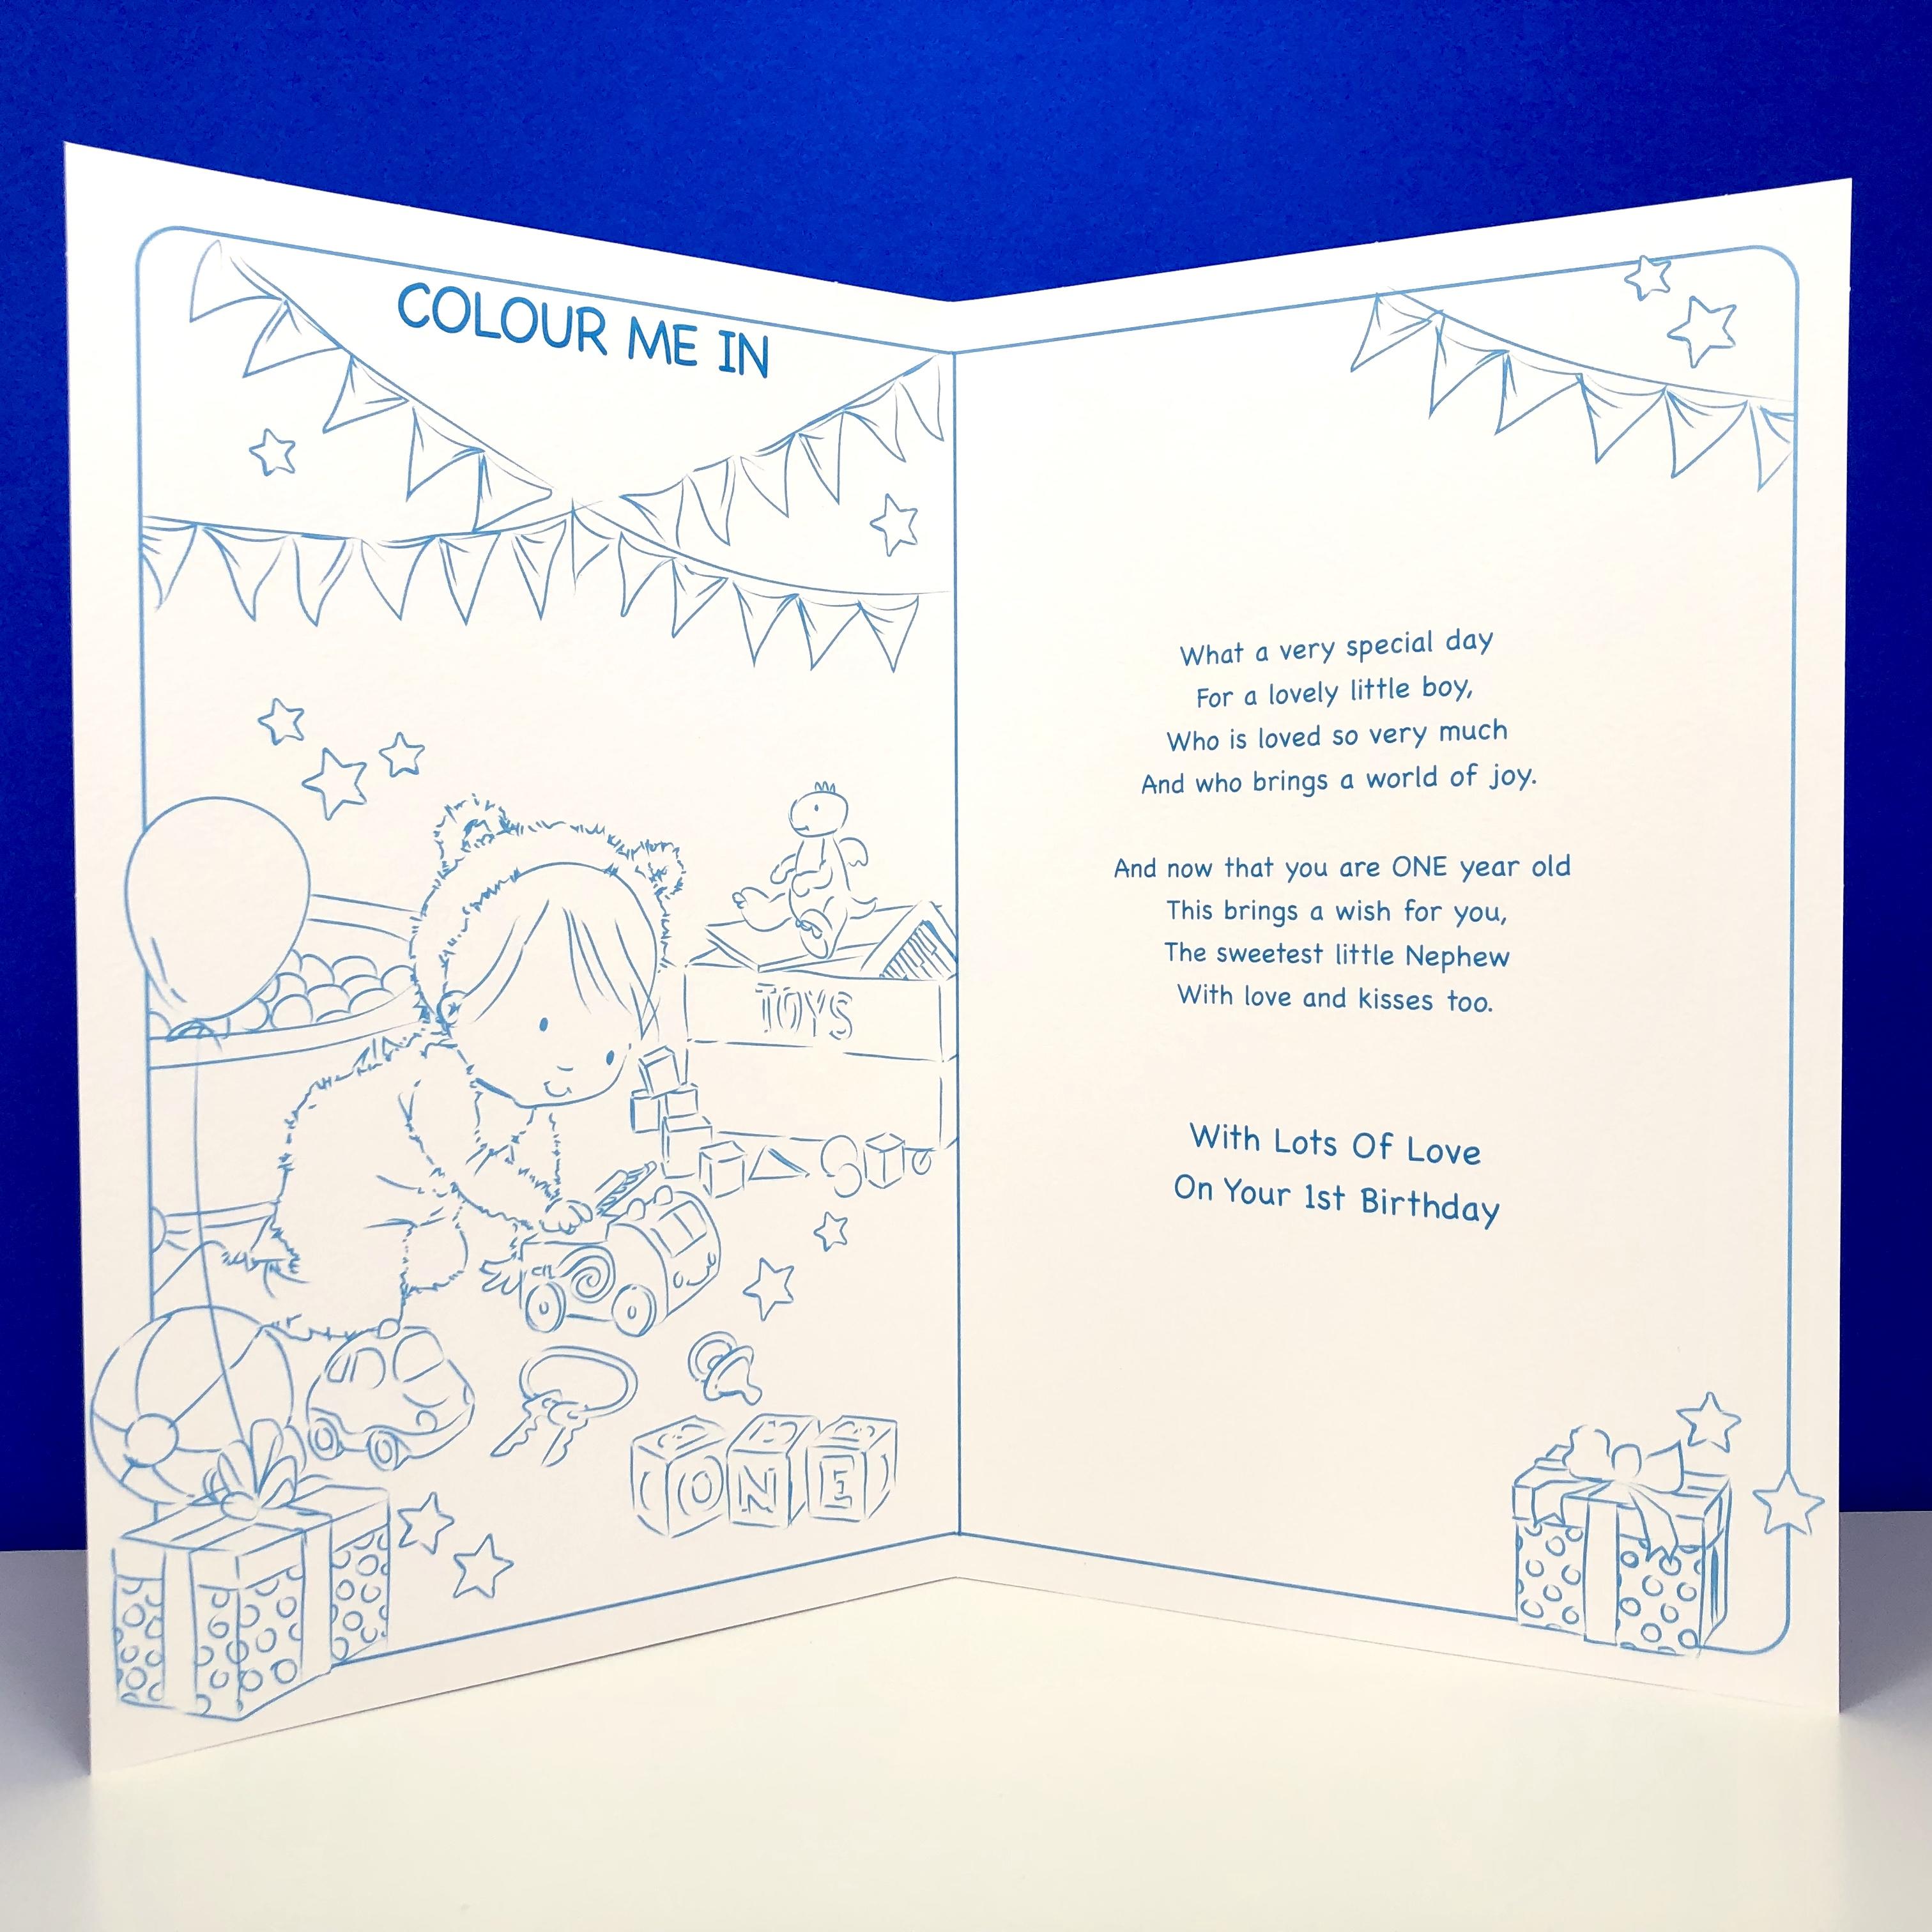 Inside Image Of Nephew Age 1 Birthday Card Showing Layout